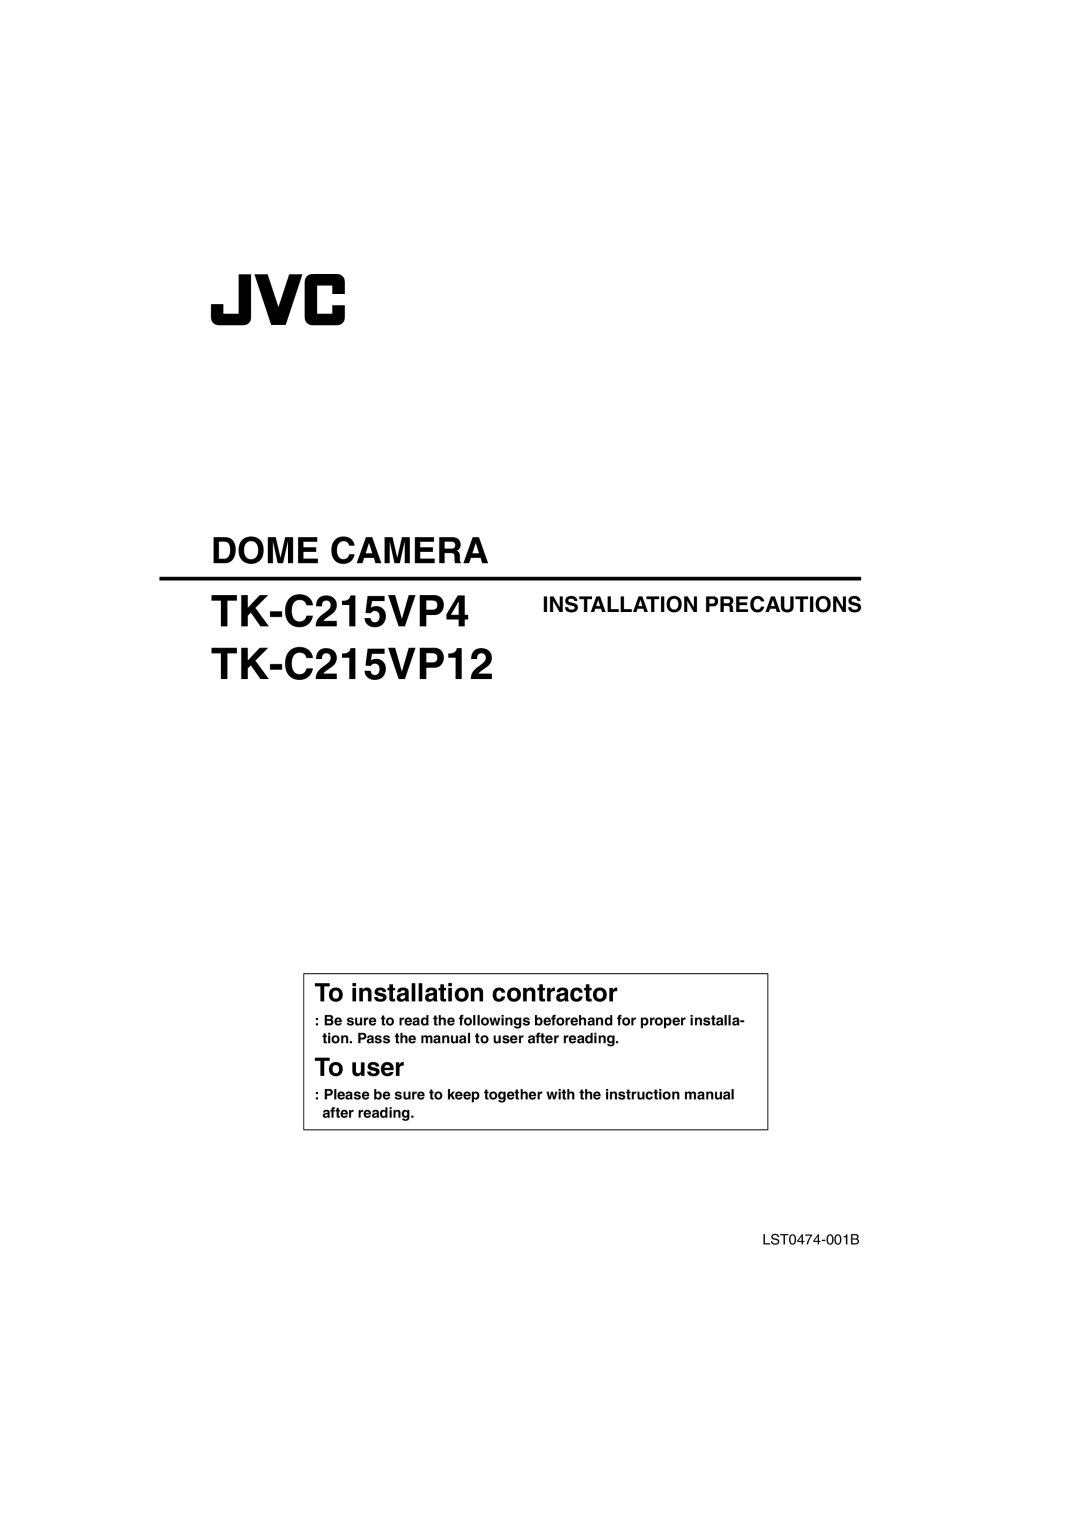 JVC TK-C215VP4 instruction manual Dome Camera, Installation Precautions, TK-C215VP12, To installation contractor, To user 